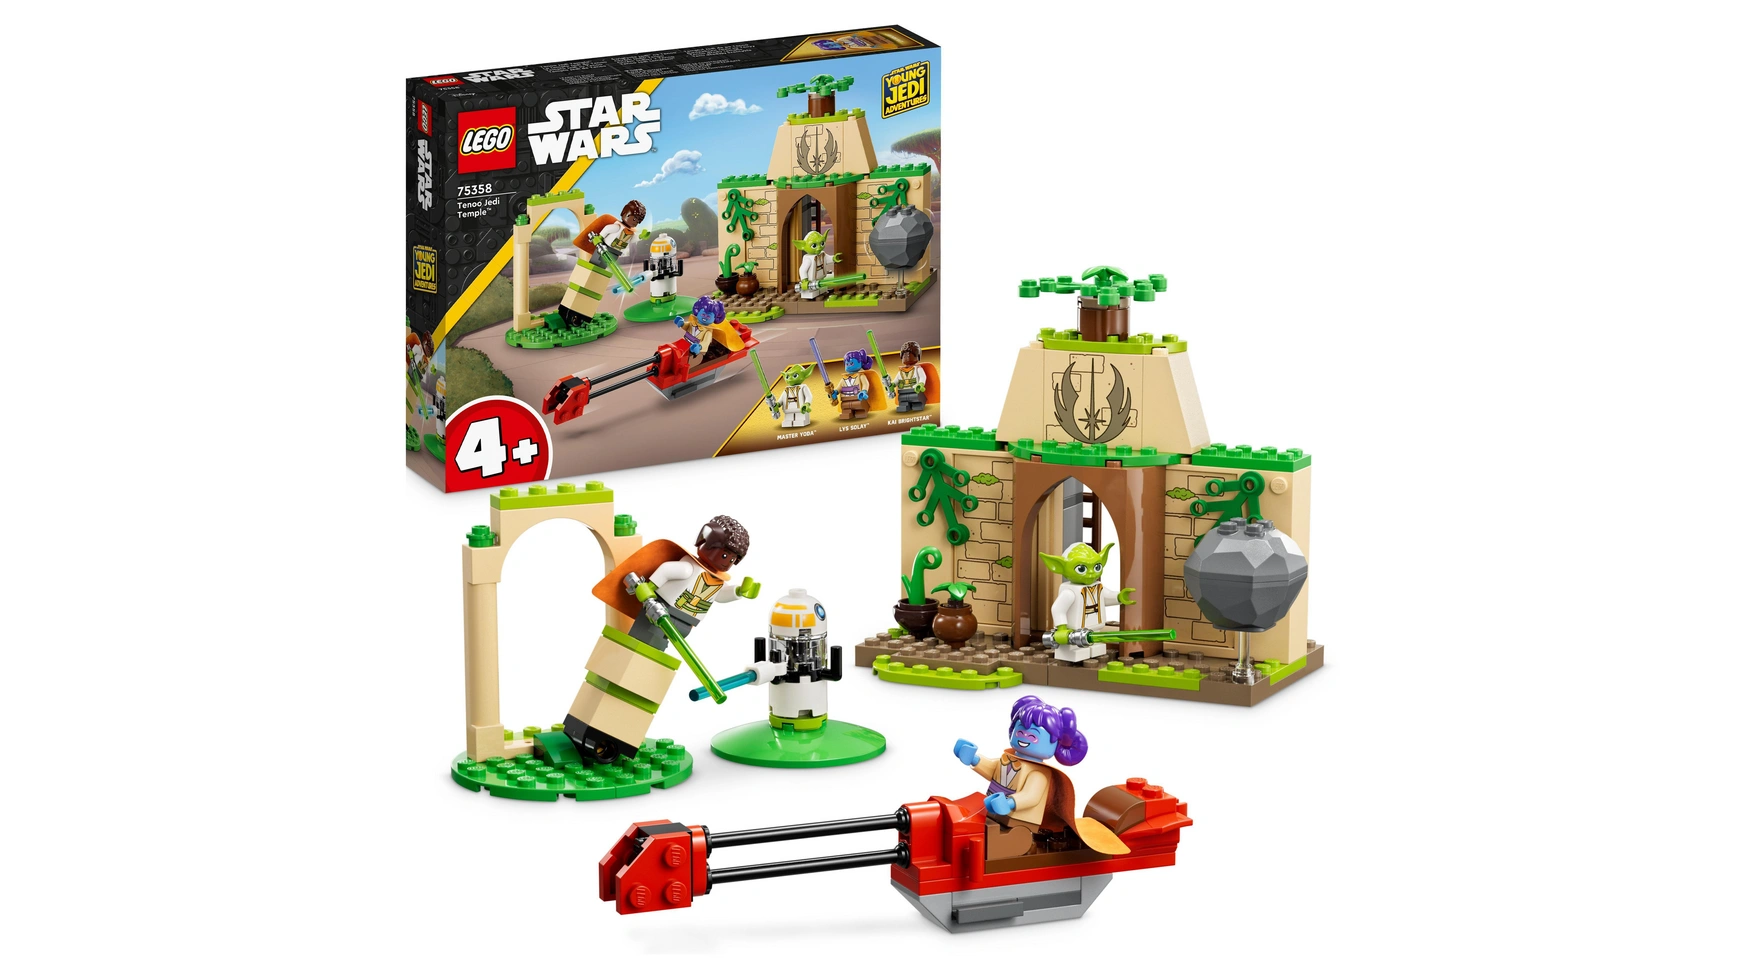 цена Lego Star Wars Набор Храм джедаев Тену 4+ с минифигурками